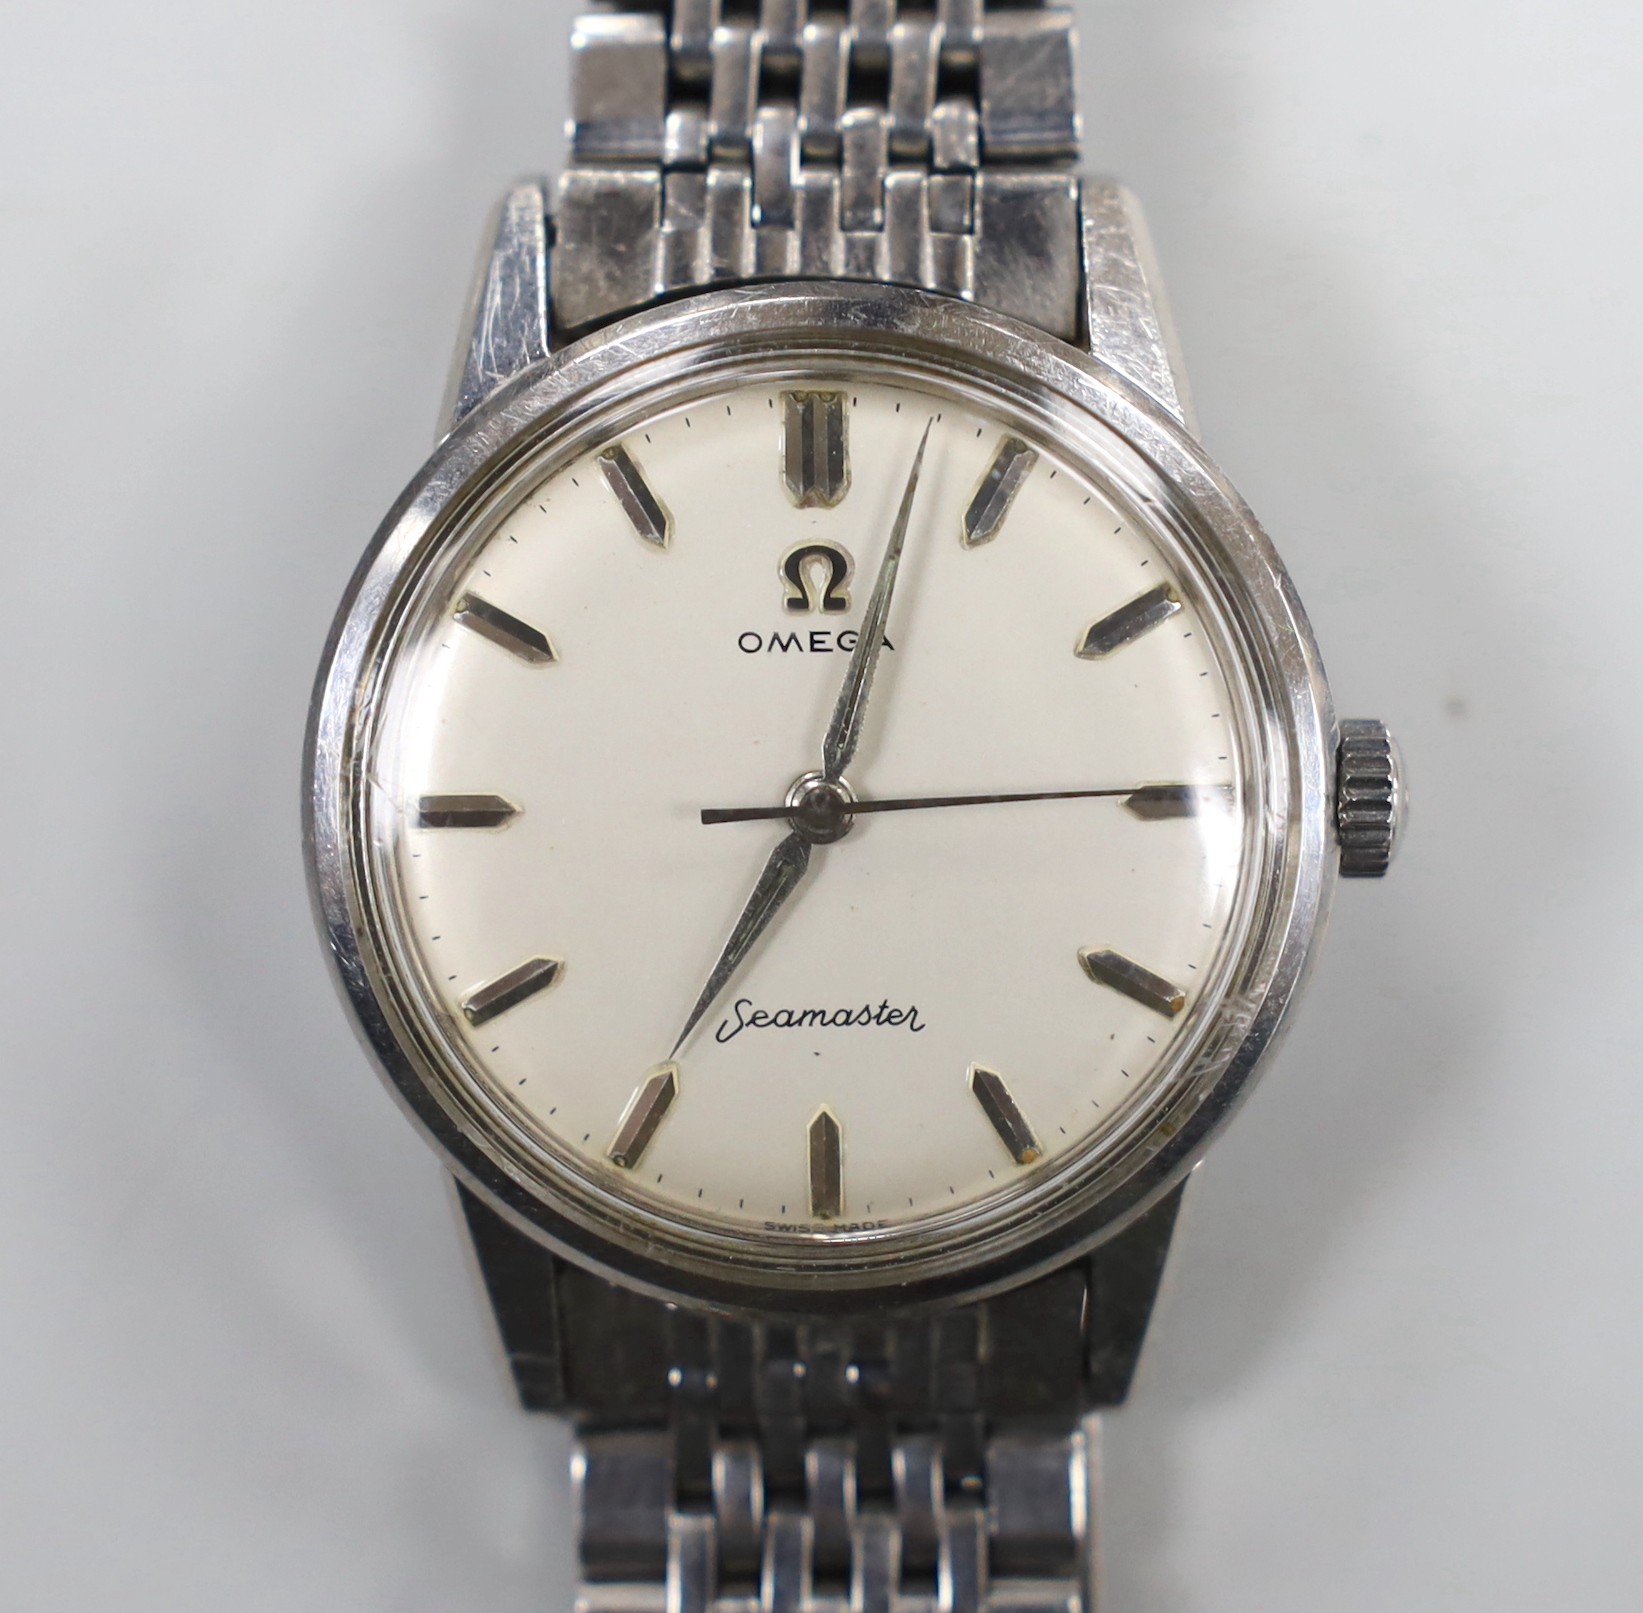 A gentleman's stainless steel Omega Seamaster manual wind wrist watch, on steel Omega bracelet, case diameter 35mm.